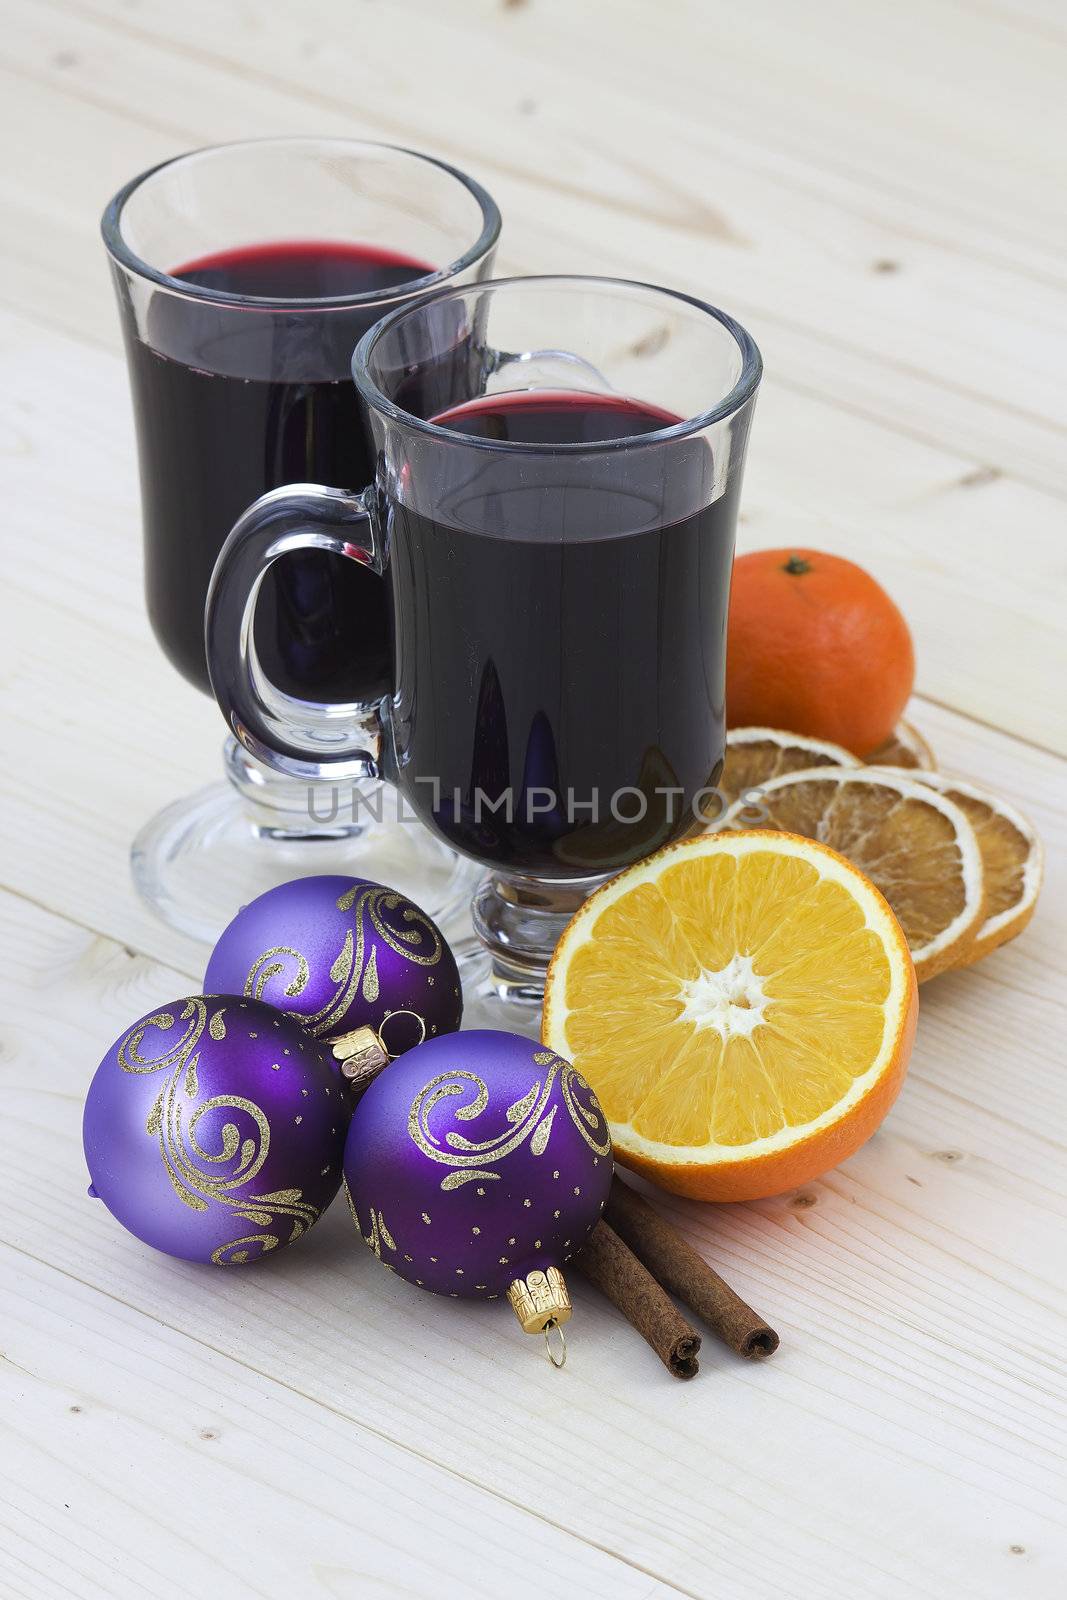 hot wine and christmas decoration by miradrozdowski